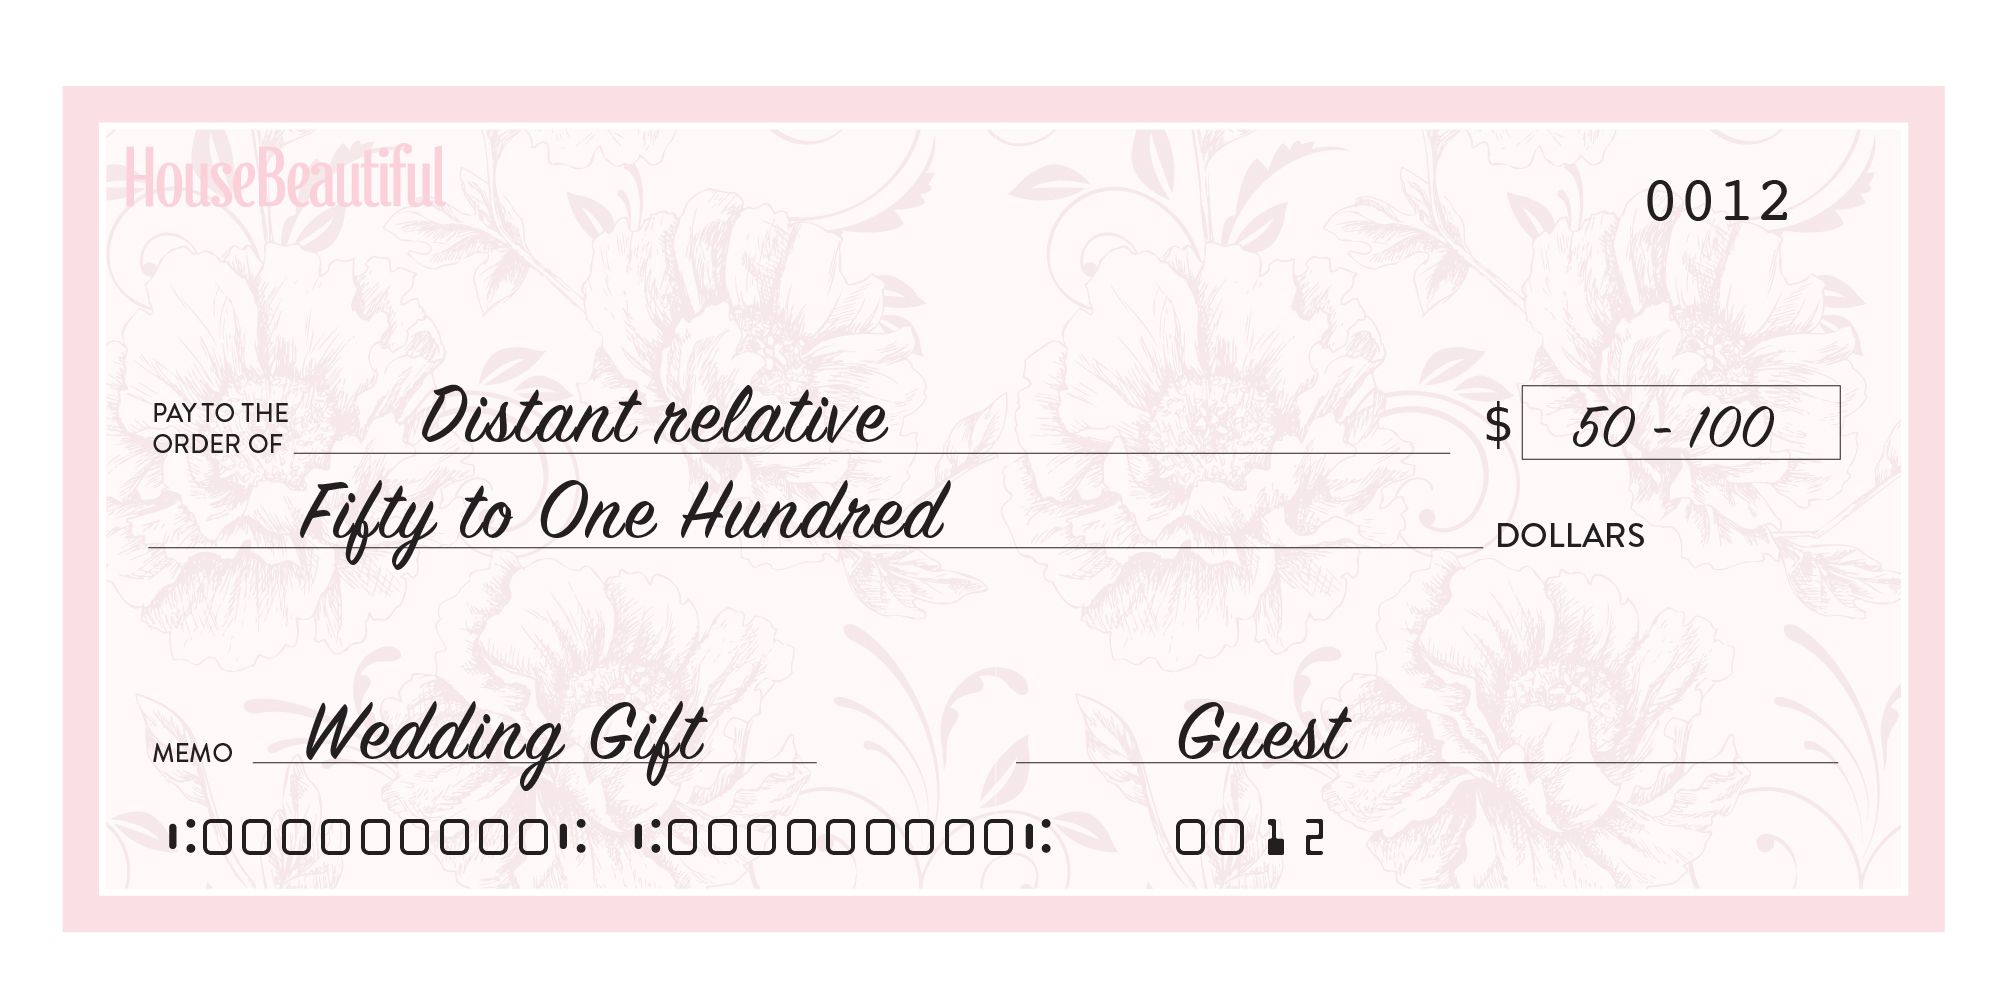 cashing wedding check etiquette